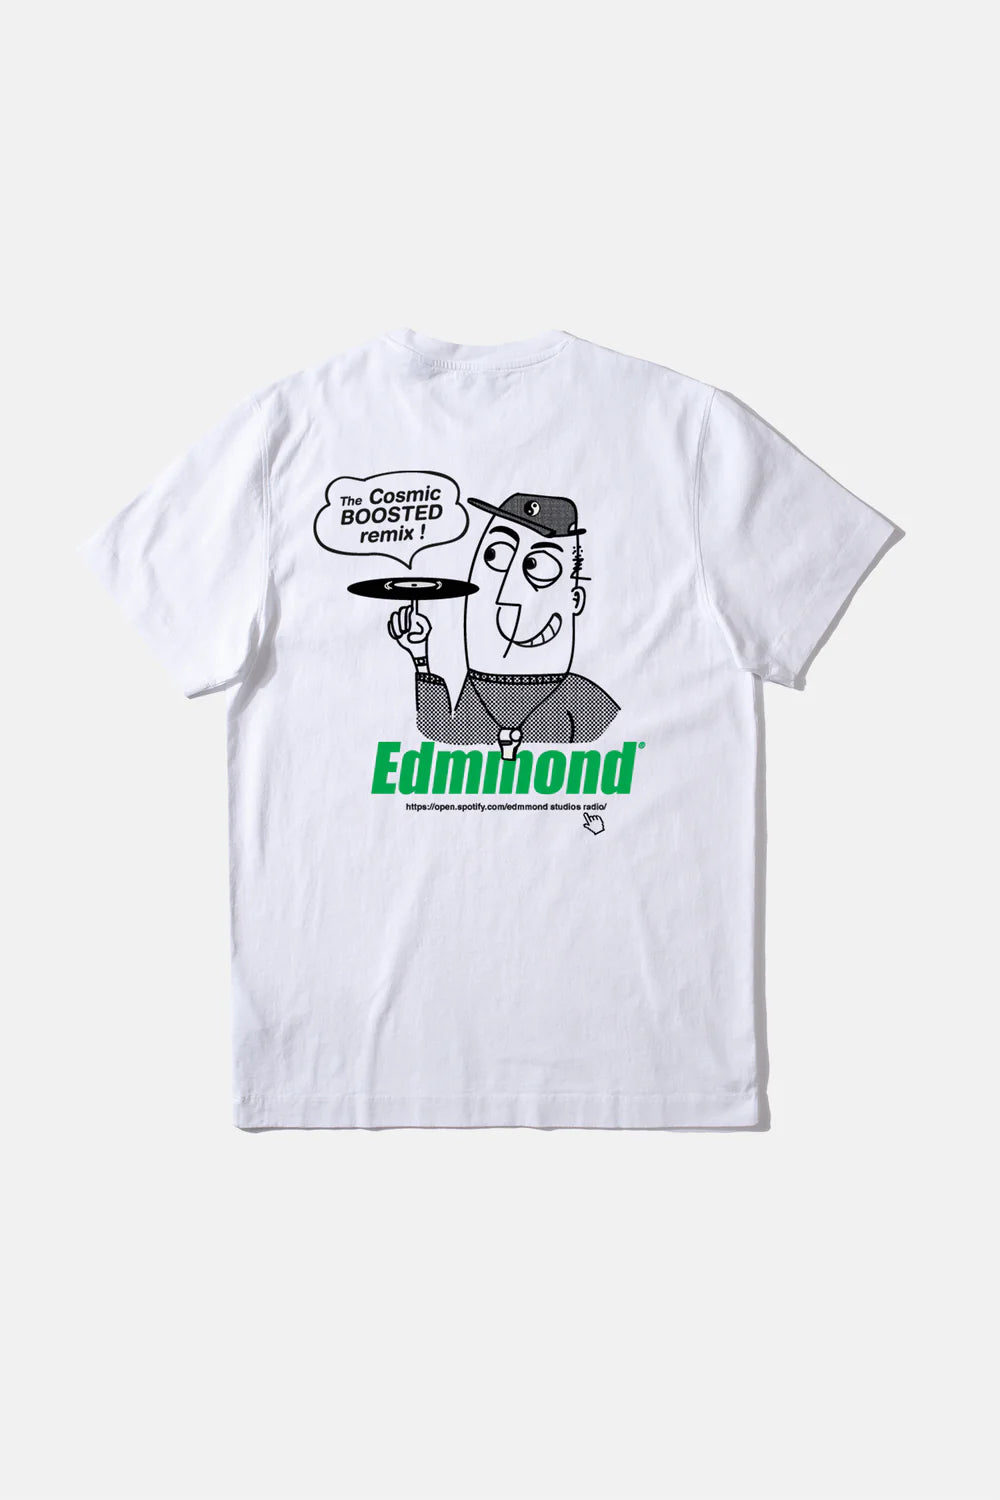 Edmmond Studios Boosted Plain White T-Shirt